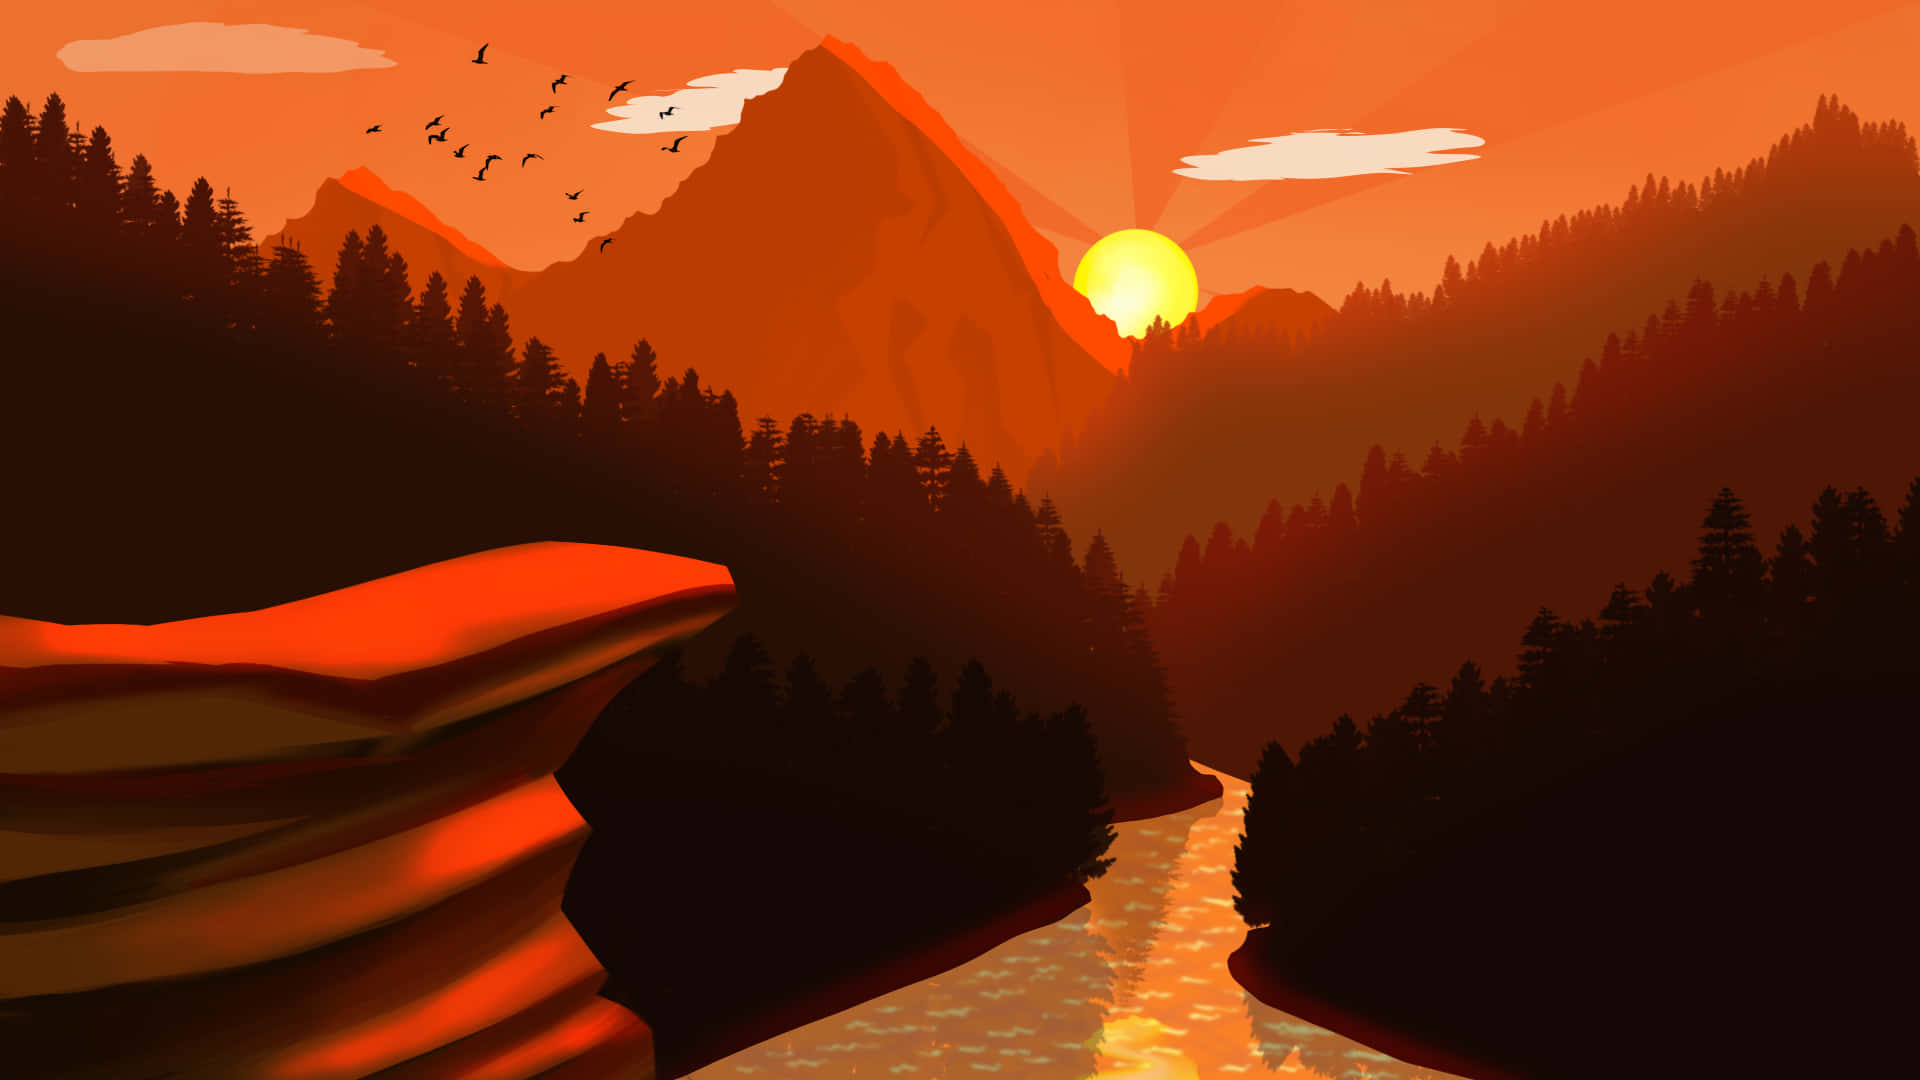 Download Orange River Mountains Sunset Digital Art Wallpaper